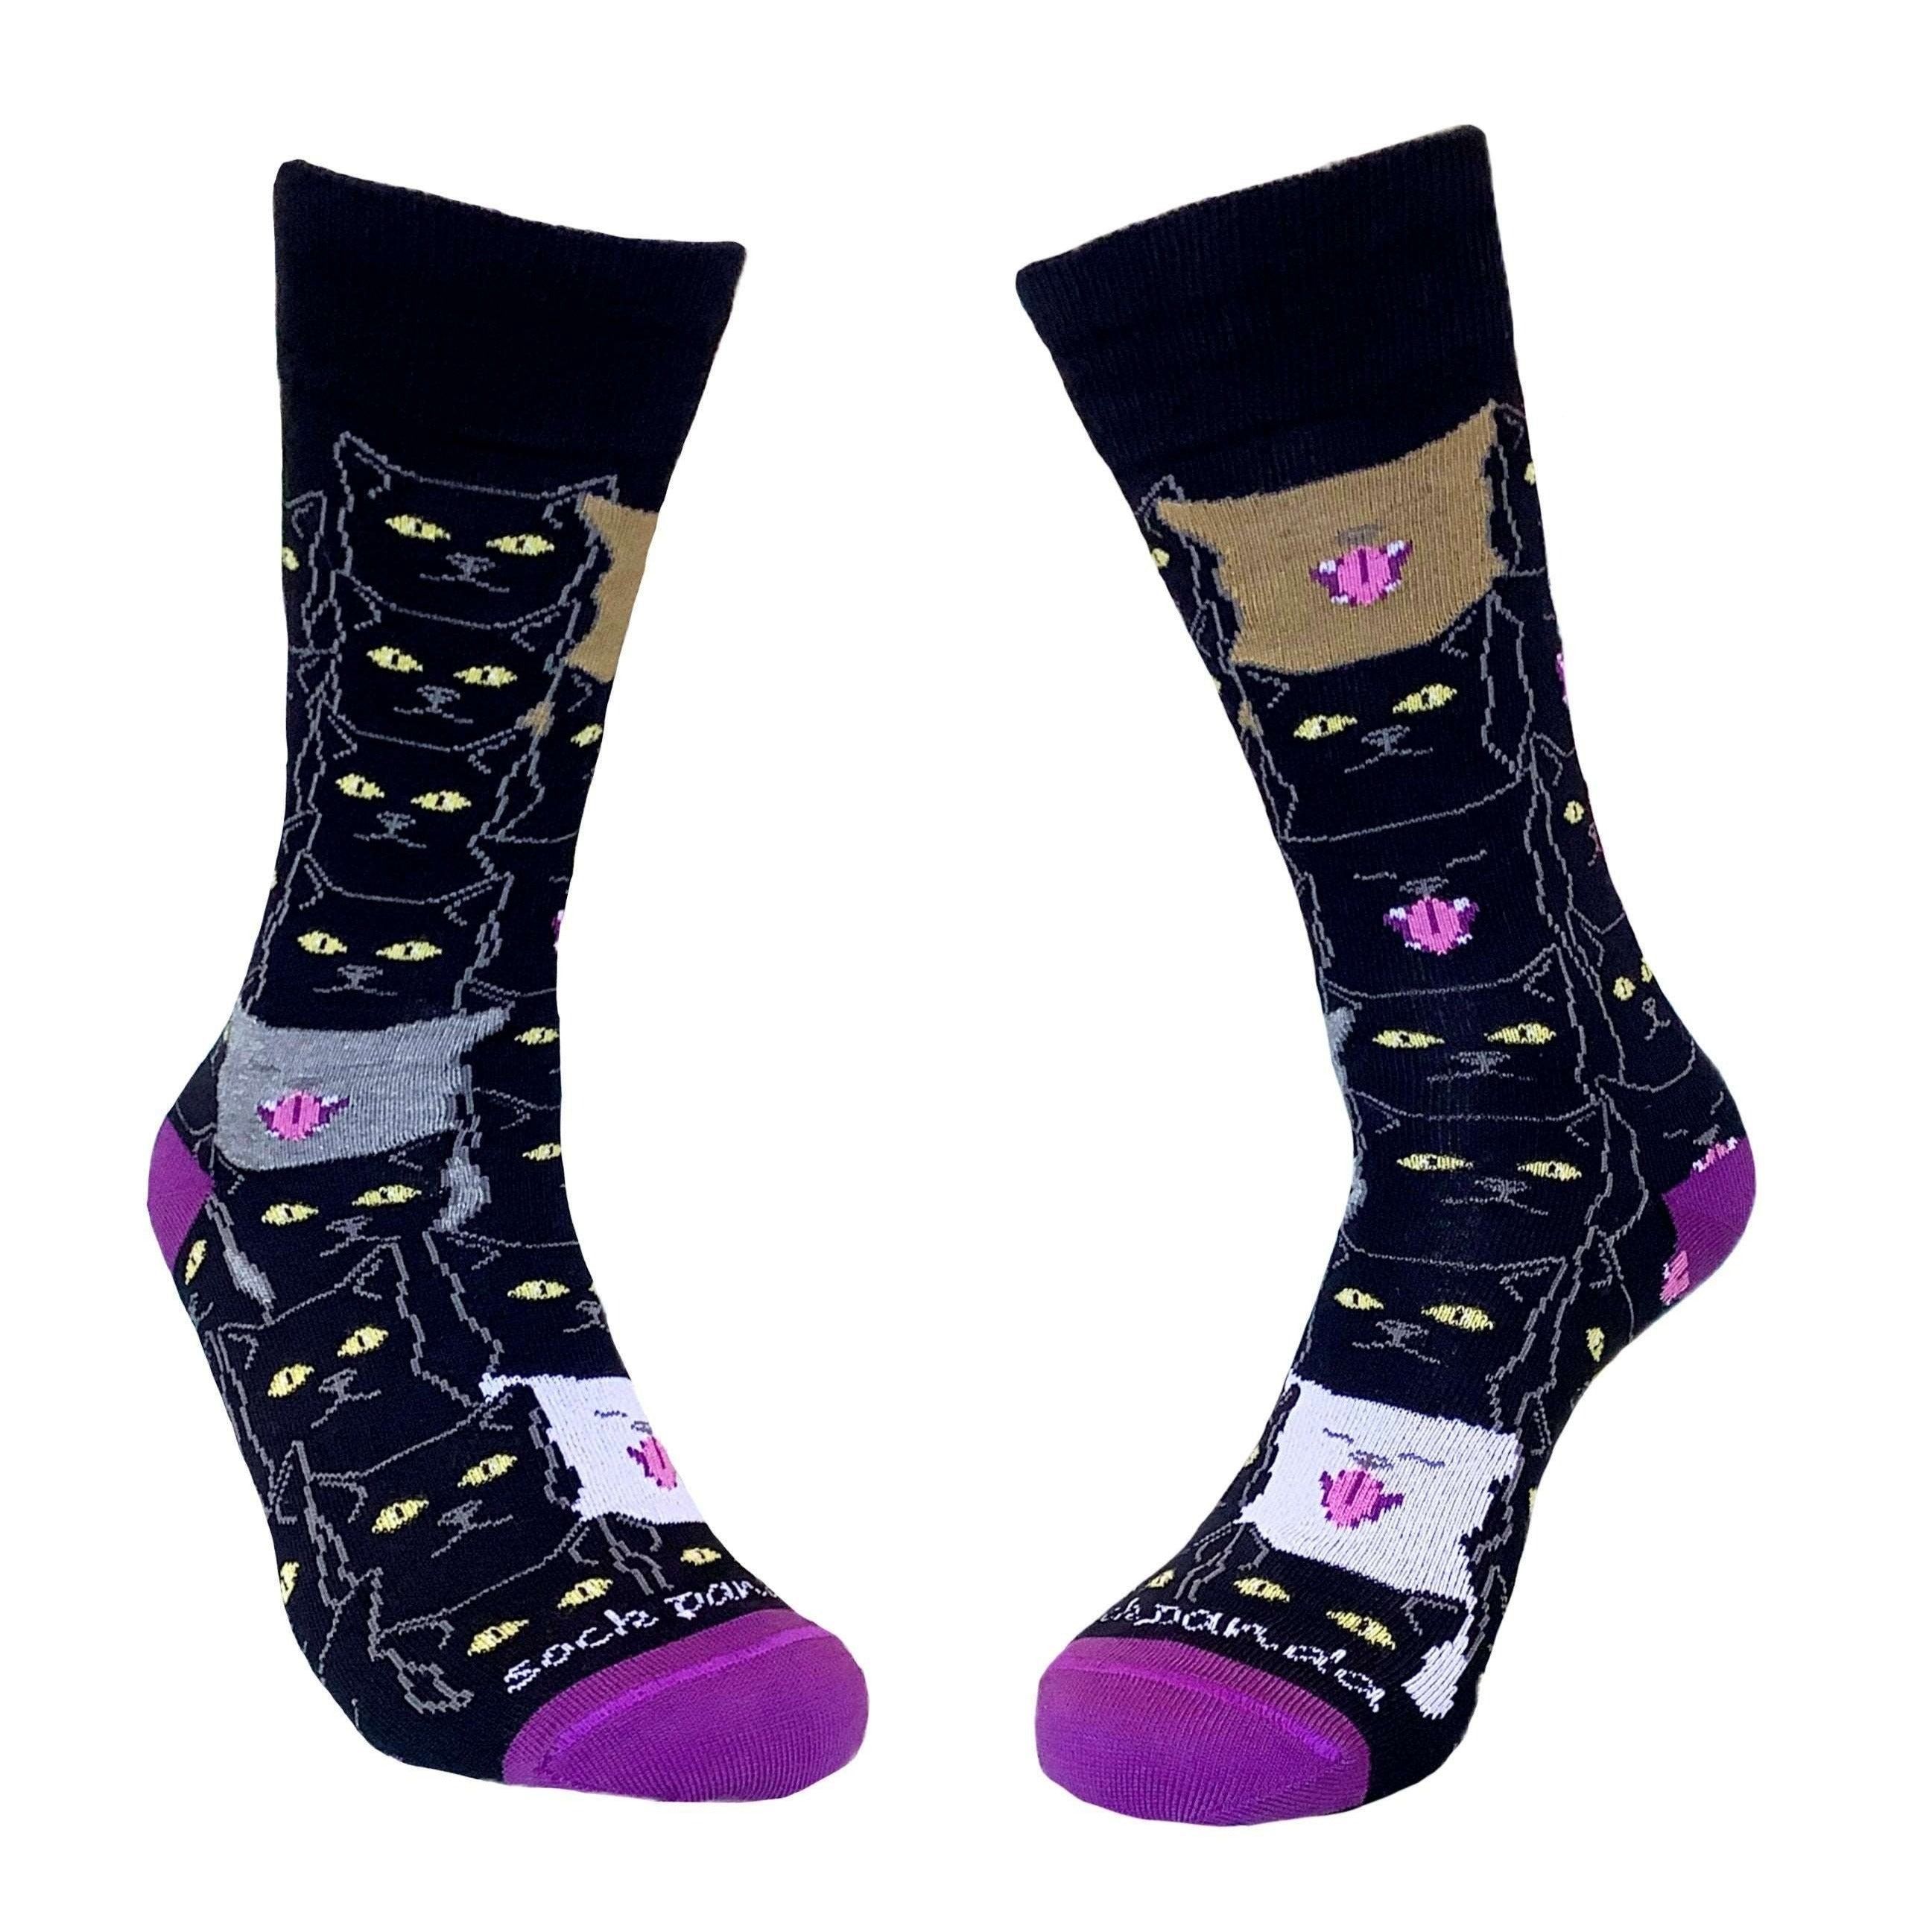 Cool Black Cat Pattern Socks from the Socks Panda